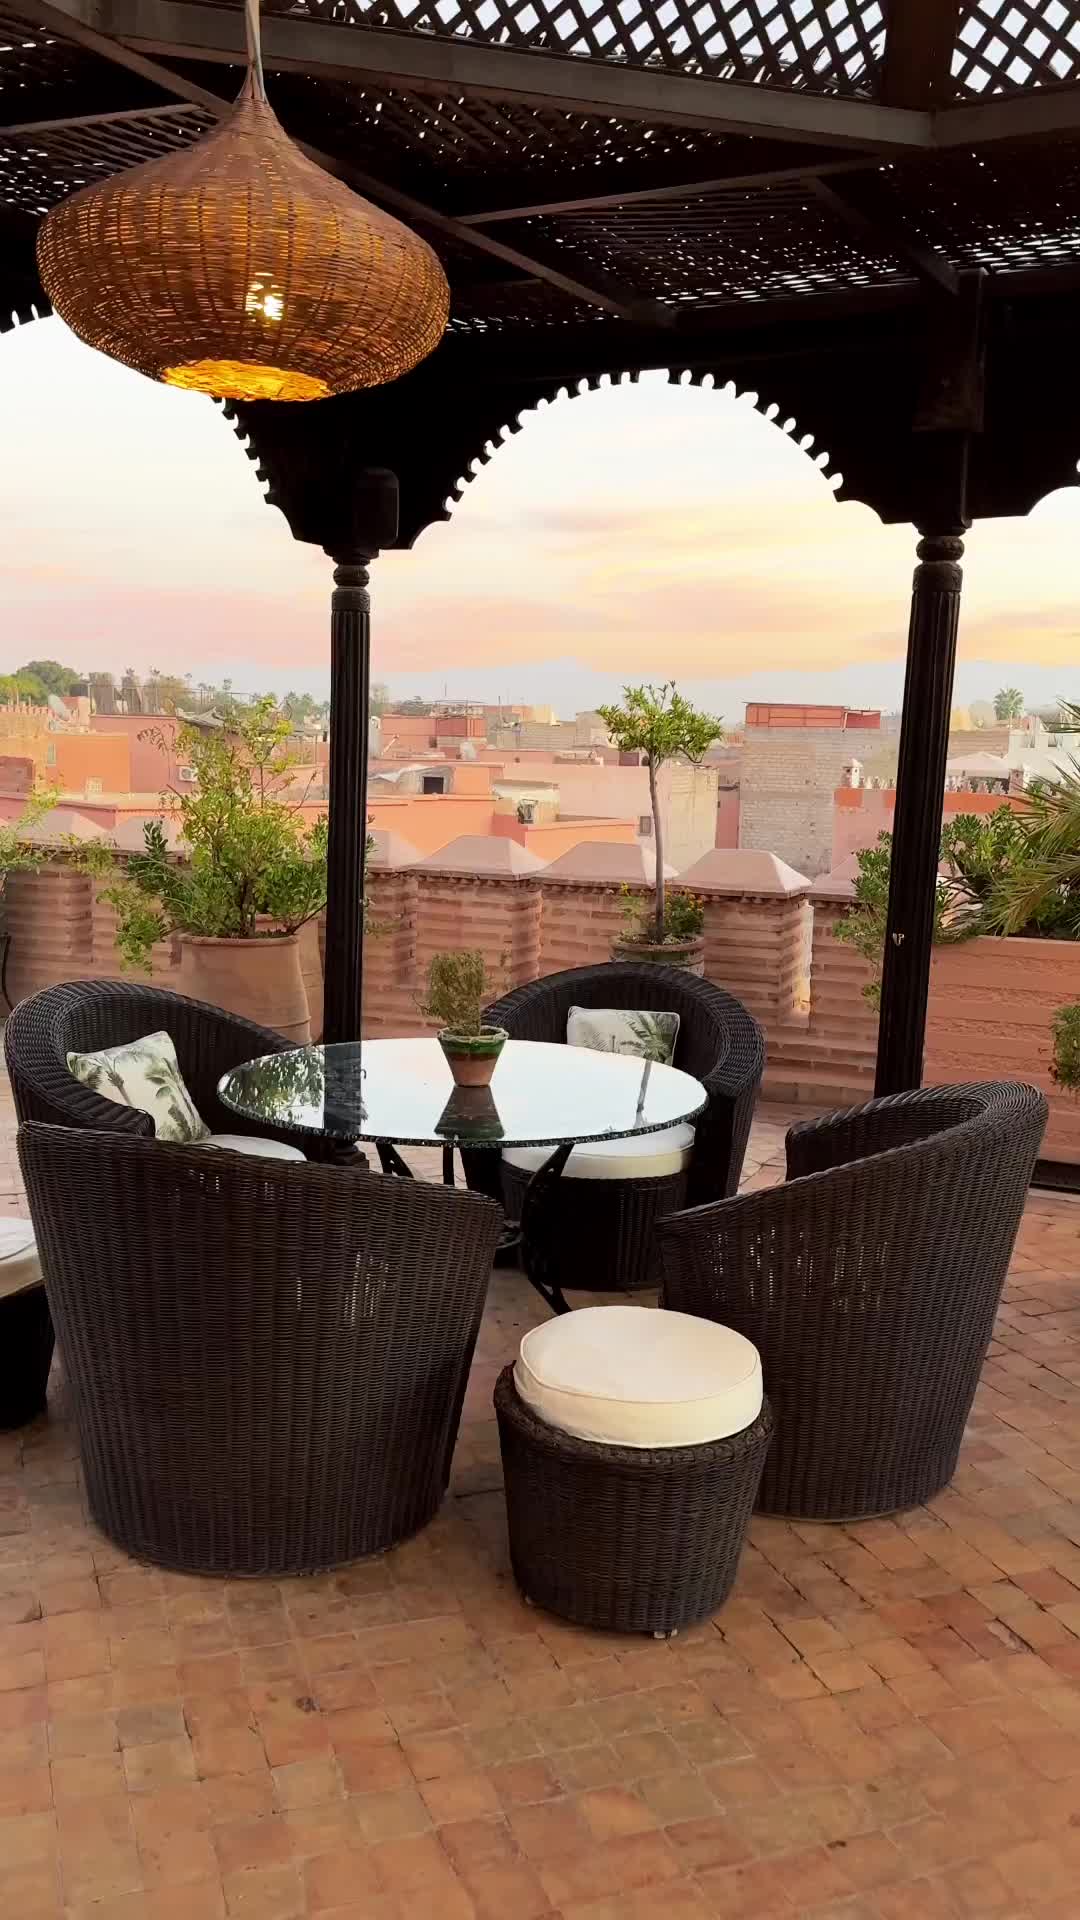 Luxury Stay at La Sultana Marrakech